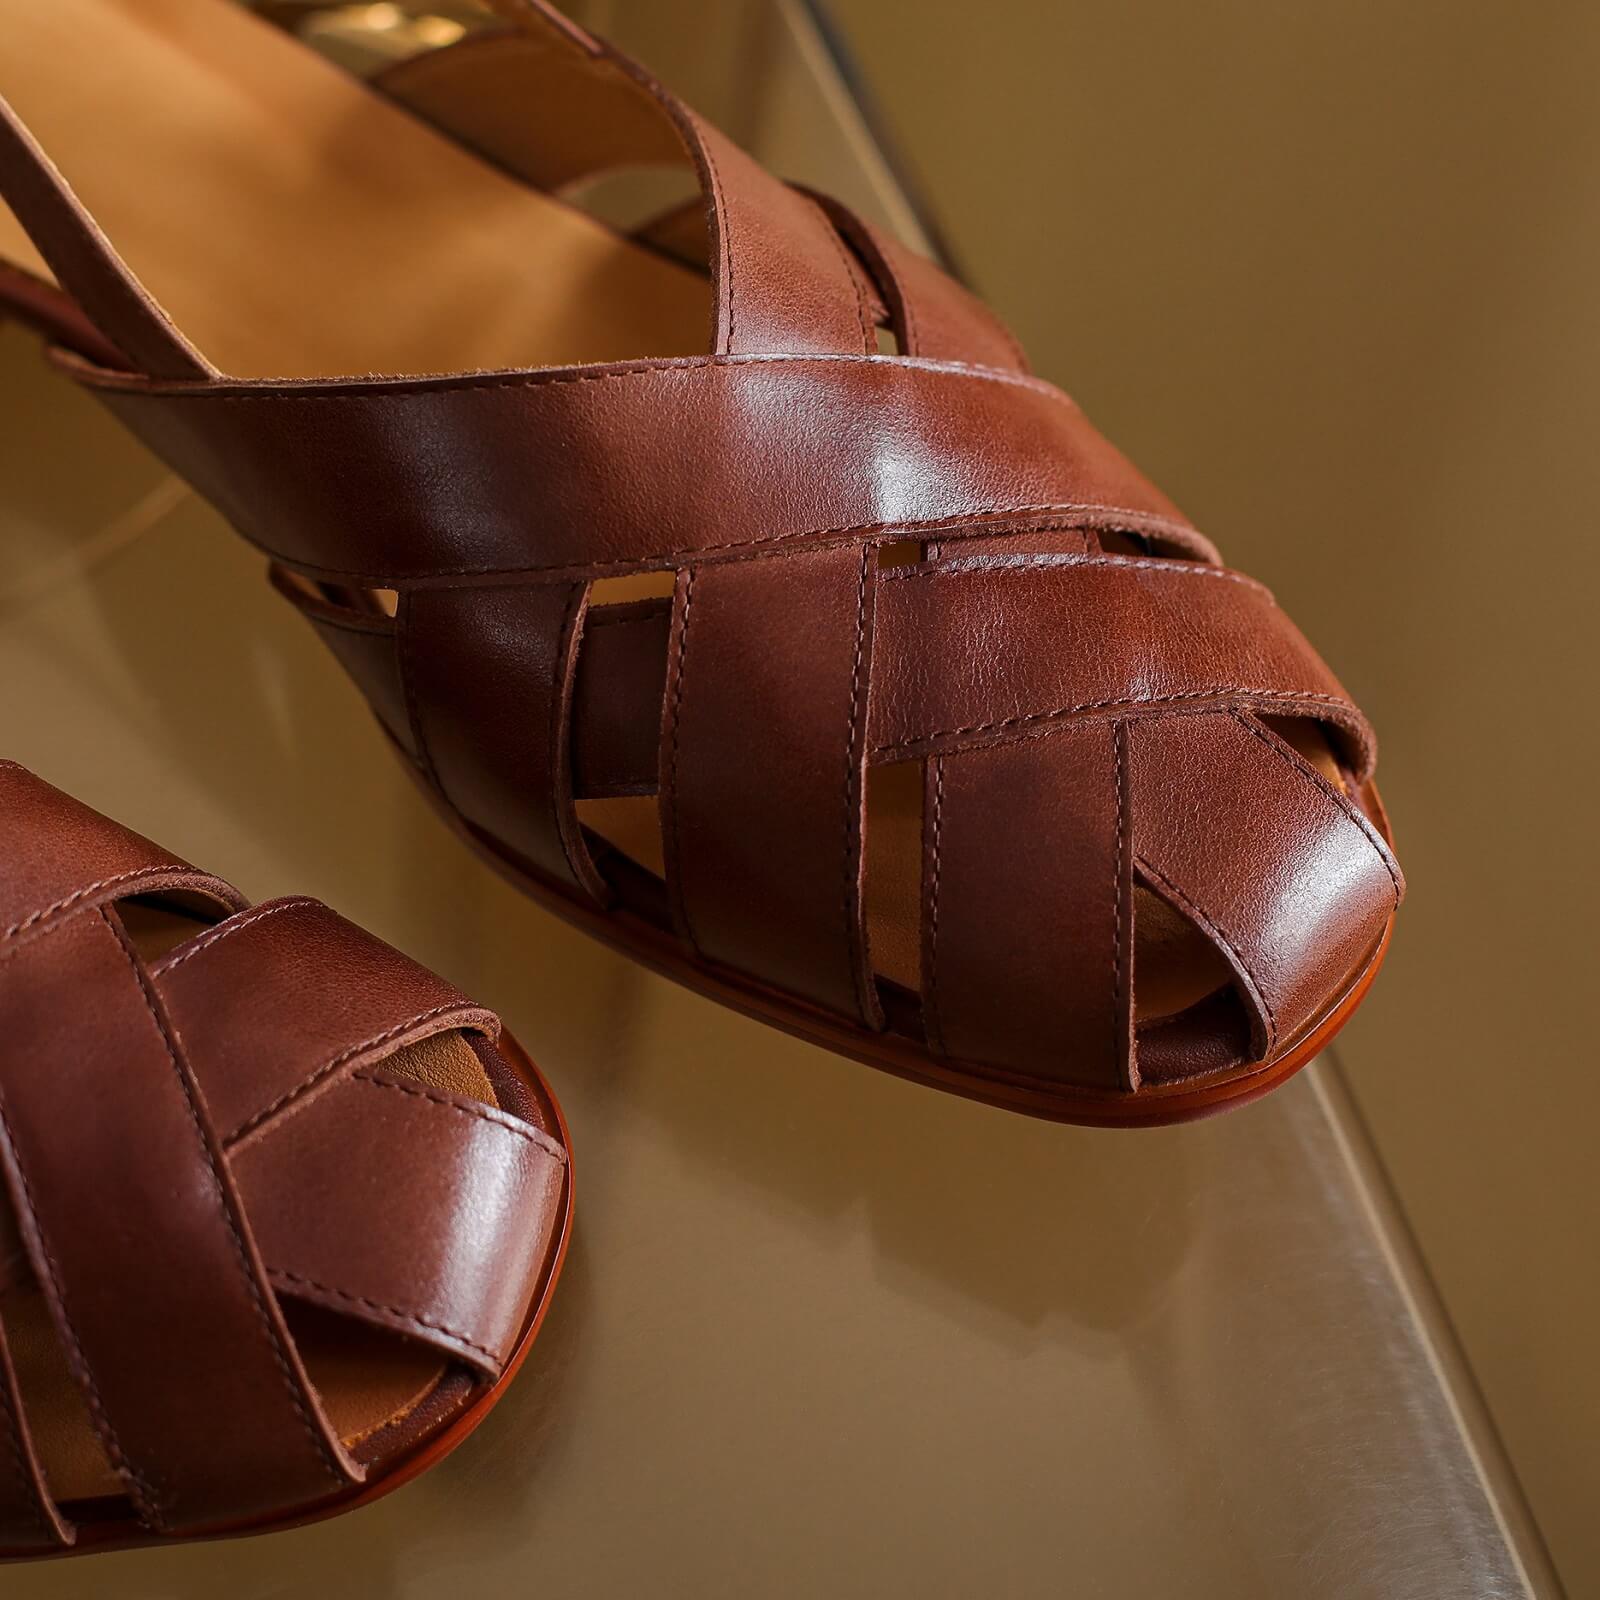 Buy YR Nowry flat sleeper fancy for women/flat sandal for women (Leather)  at Amazon.in